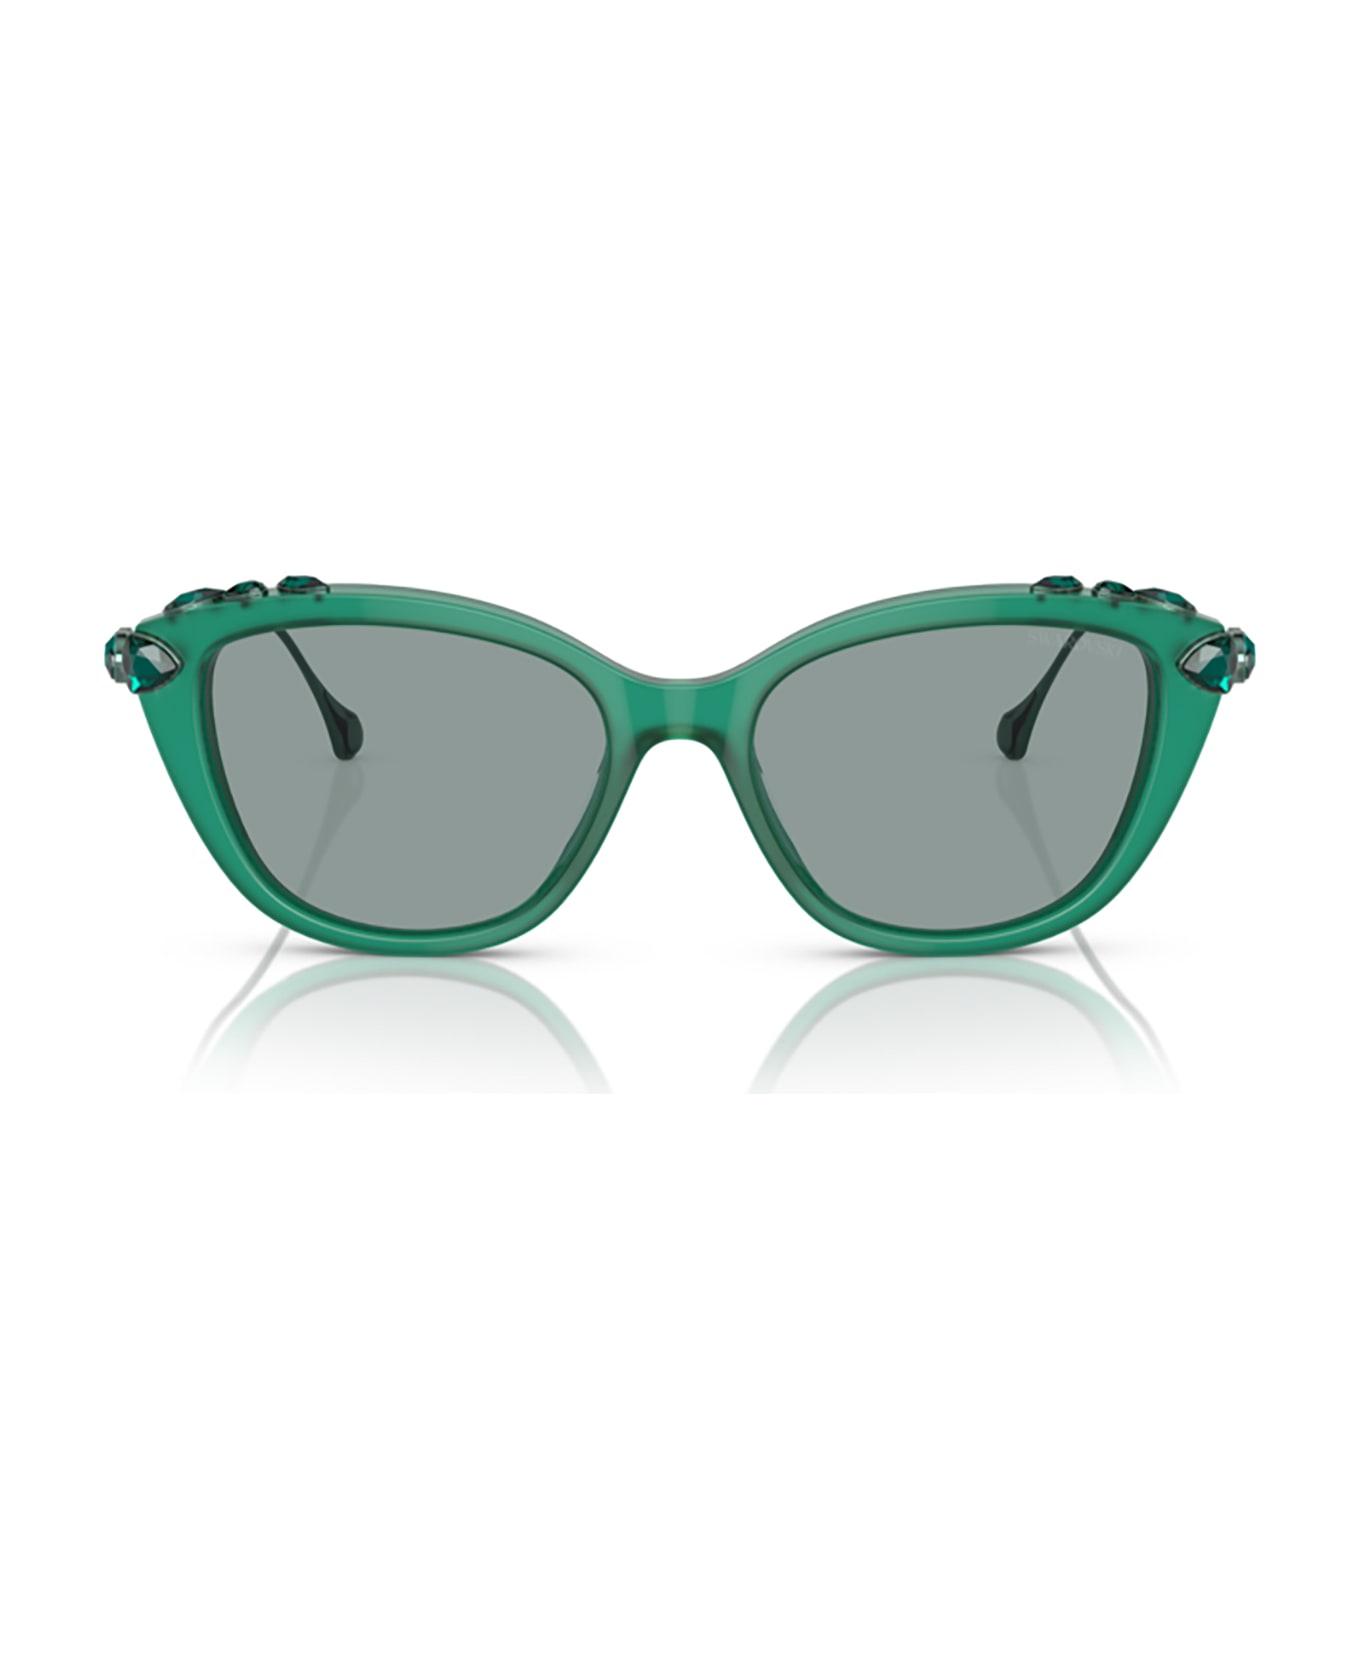 Swarovski Sk6010 Opal Green Sunglasses - Opal Green サングラス